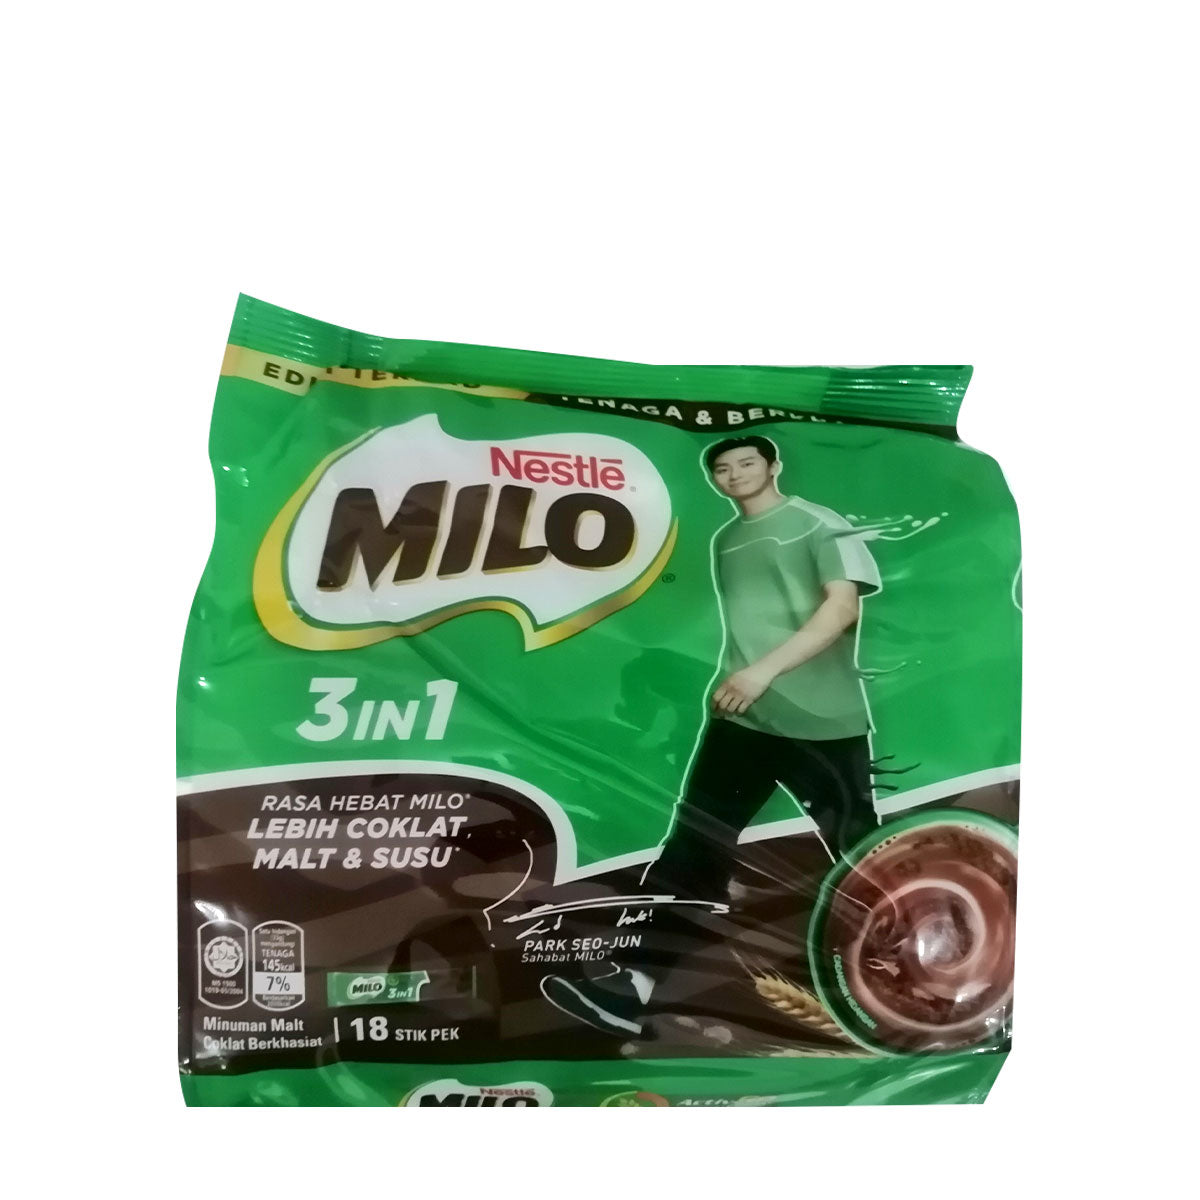 Nestle Milo 3 IN 1 شراب الكاكاو